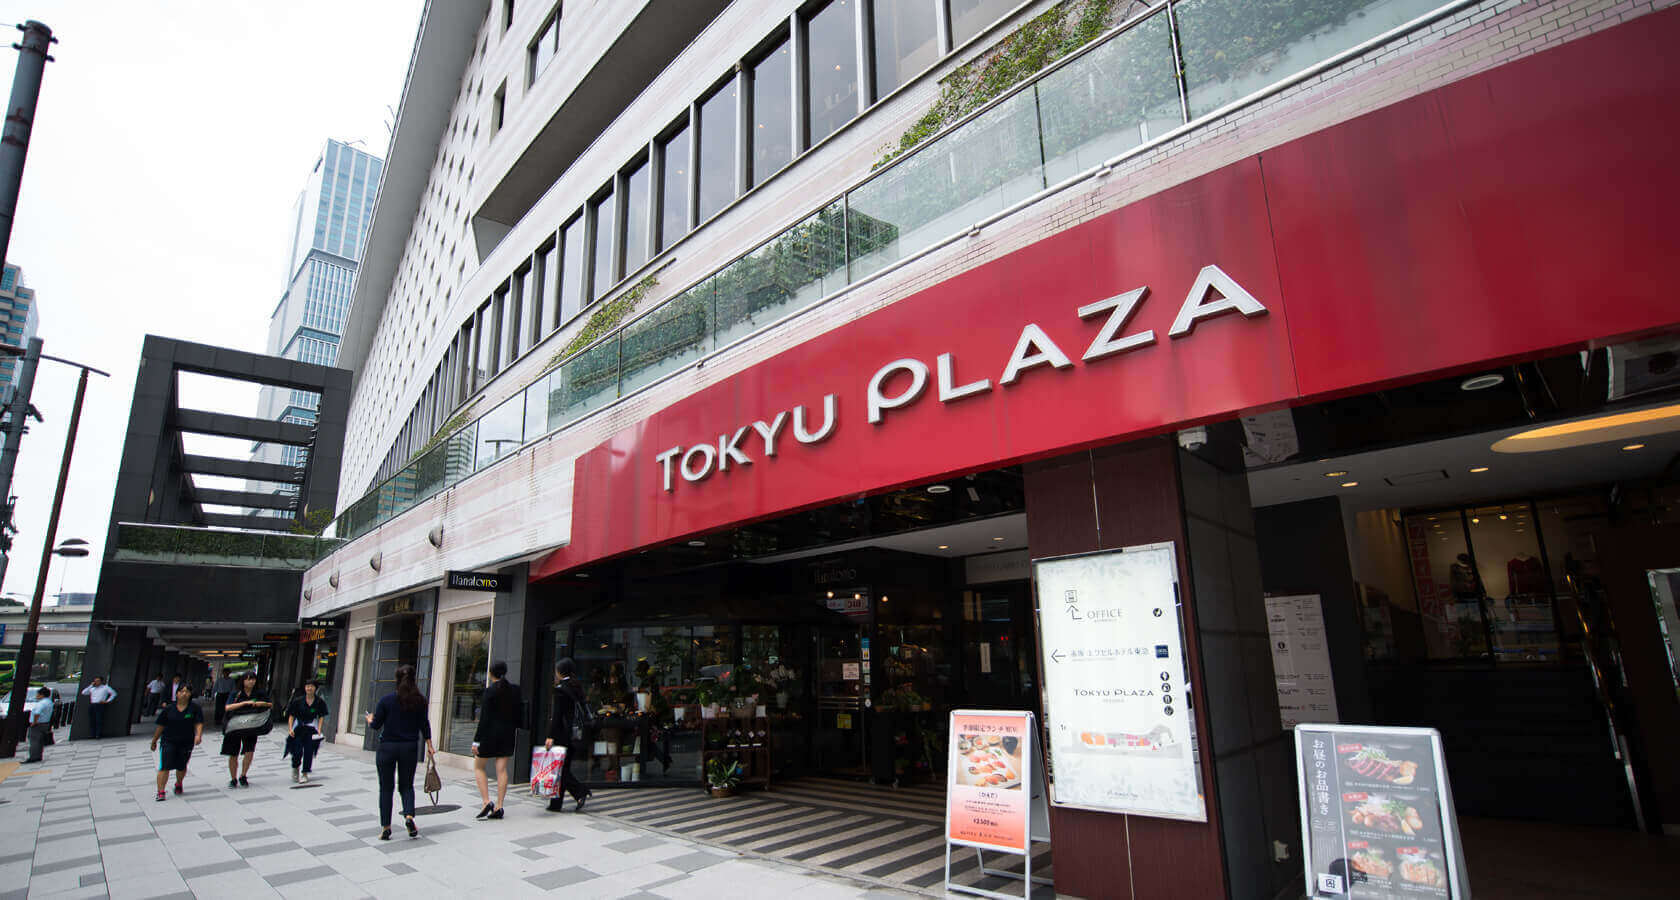 Tokyu Plaza Akasaka: A Shopping Complex at a Traffic Hub - Tokyo.com